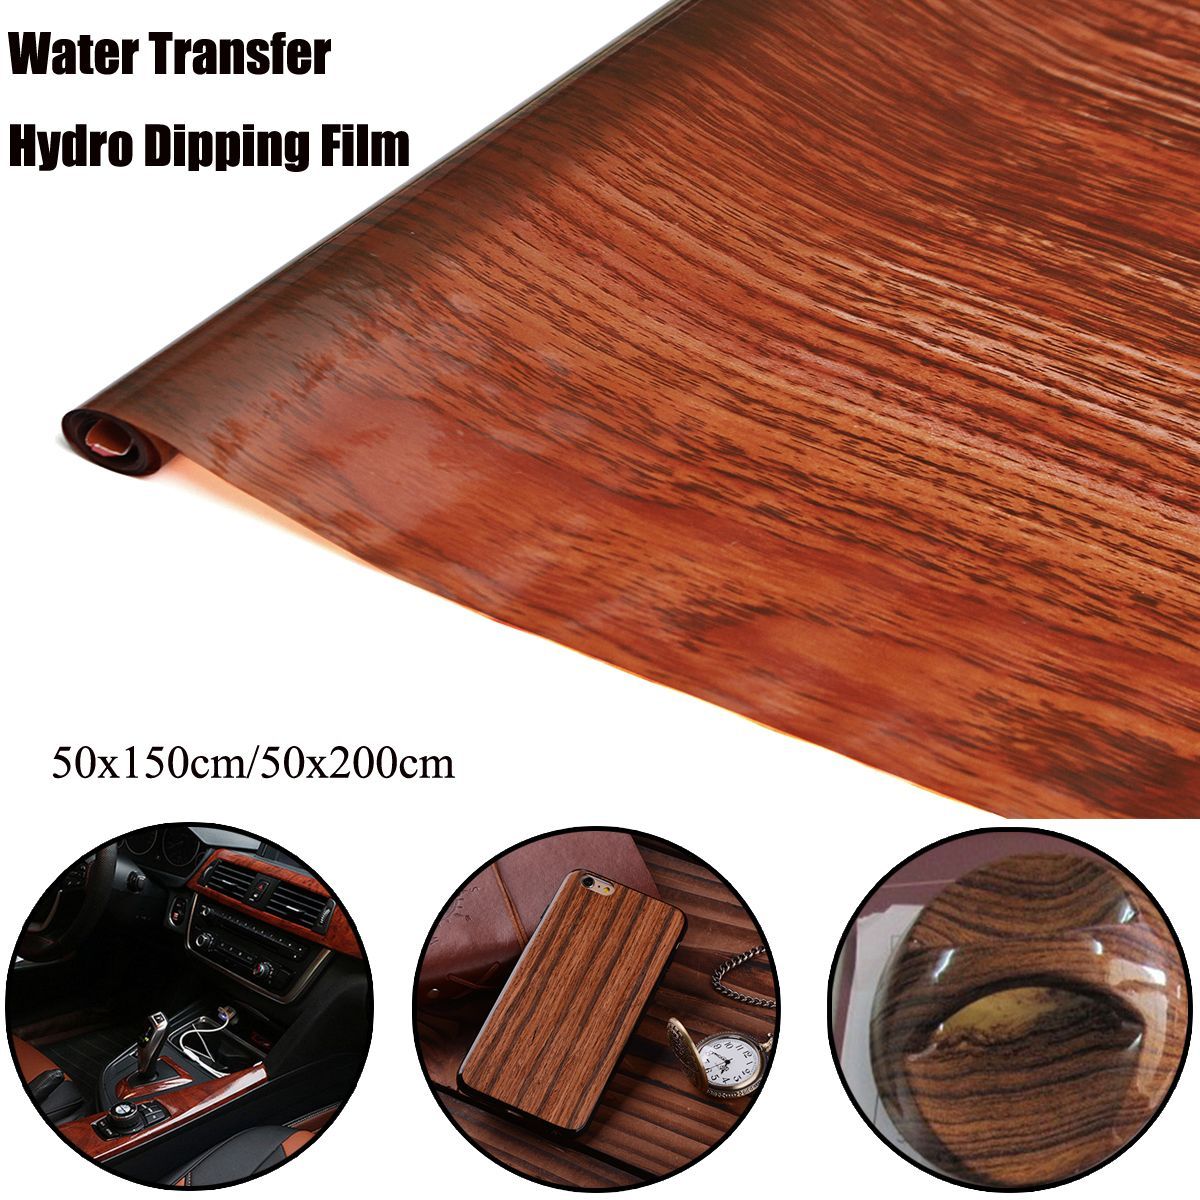 Brown-Wood-Grain-PVA-Hydrographic-Water-Transfer-Hydro-Dipping-DIP-Print-Film-Decoration-1305538